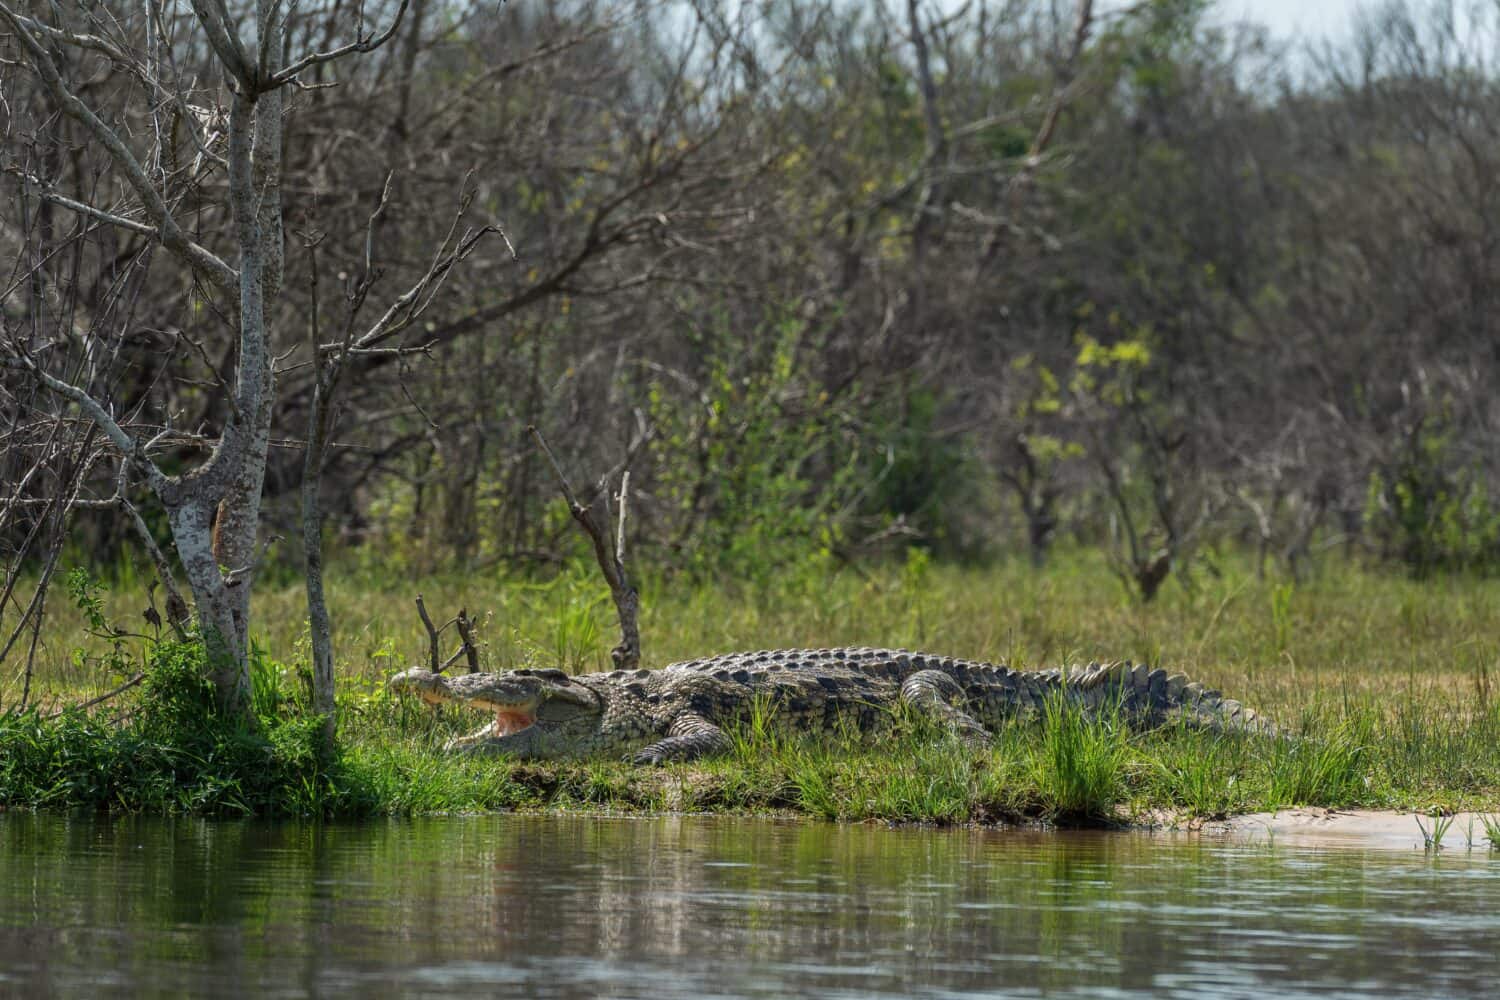 Nile Crocodile - Crocodylus niloticus, large crocodile from African lakes and rivers, Nile river, Murchison falls, Uganda.